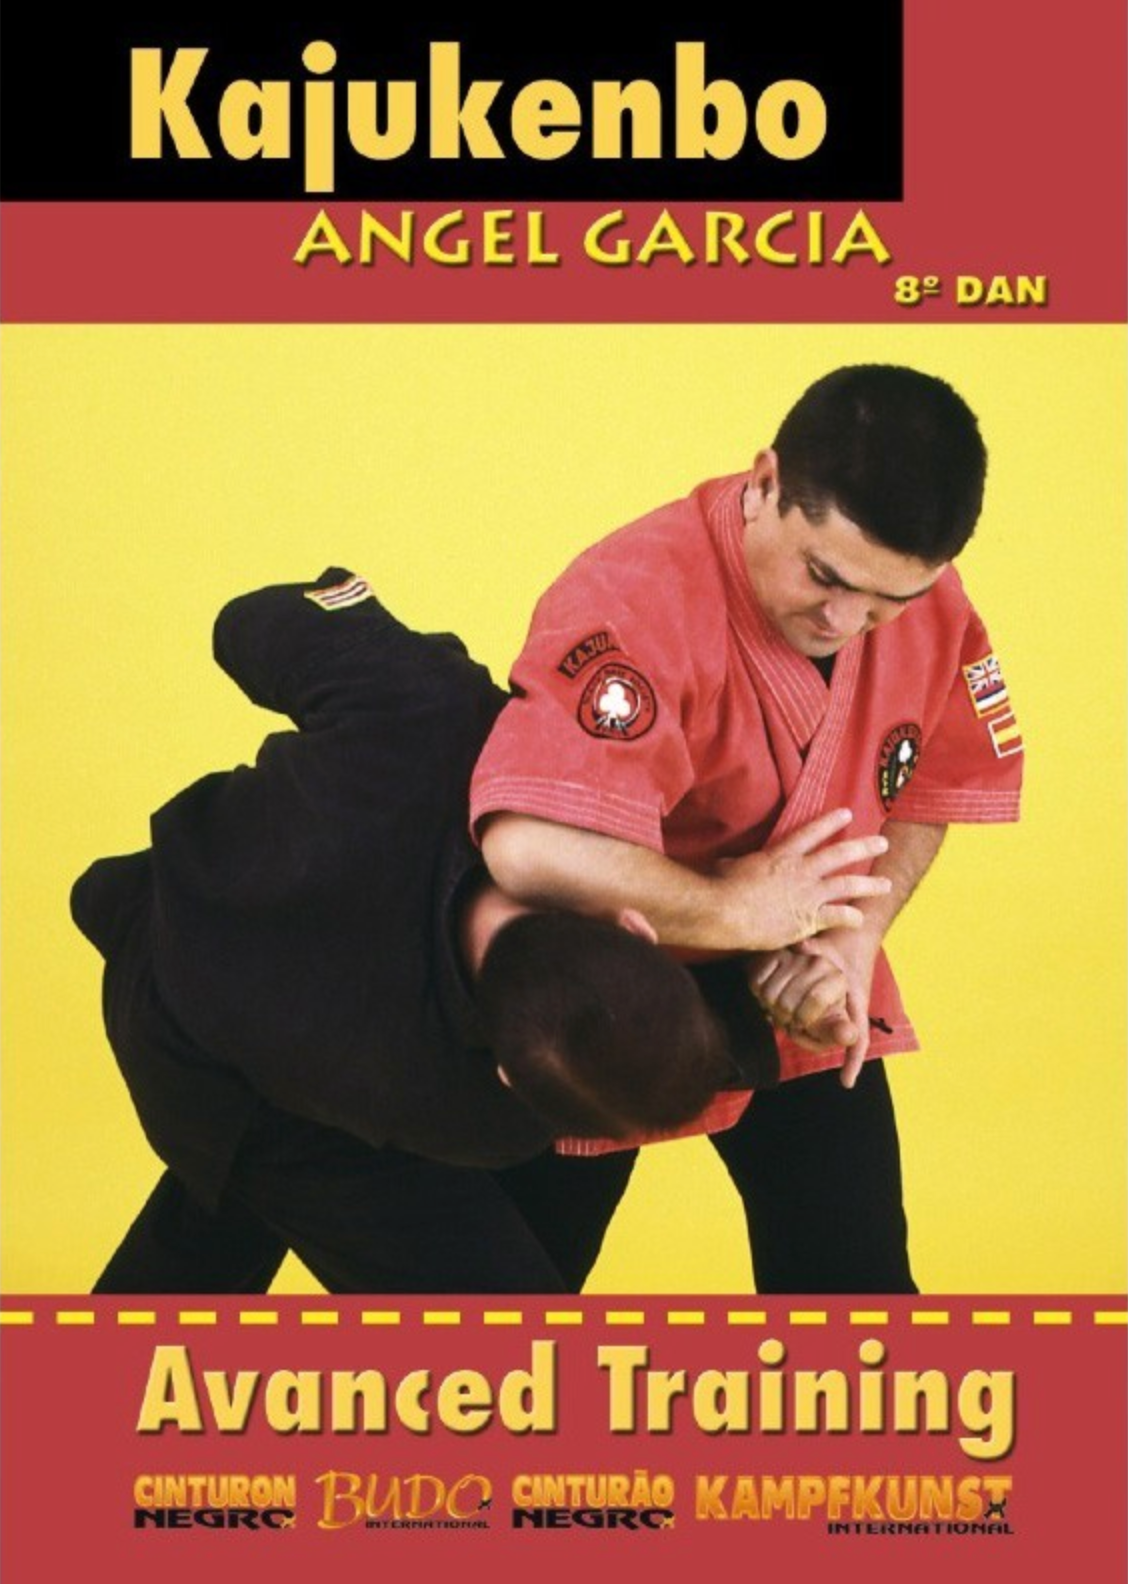 Kajukenbo Advanced Training DVD by Angel Garcia - Budovideos Inc